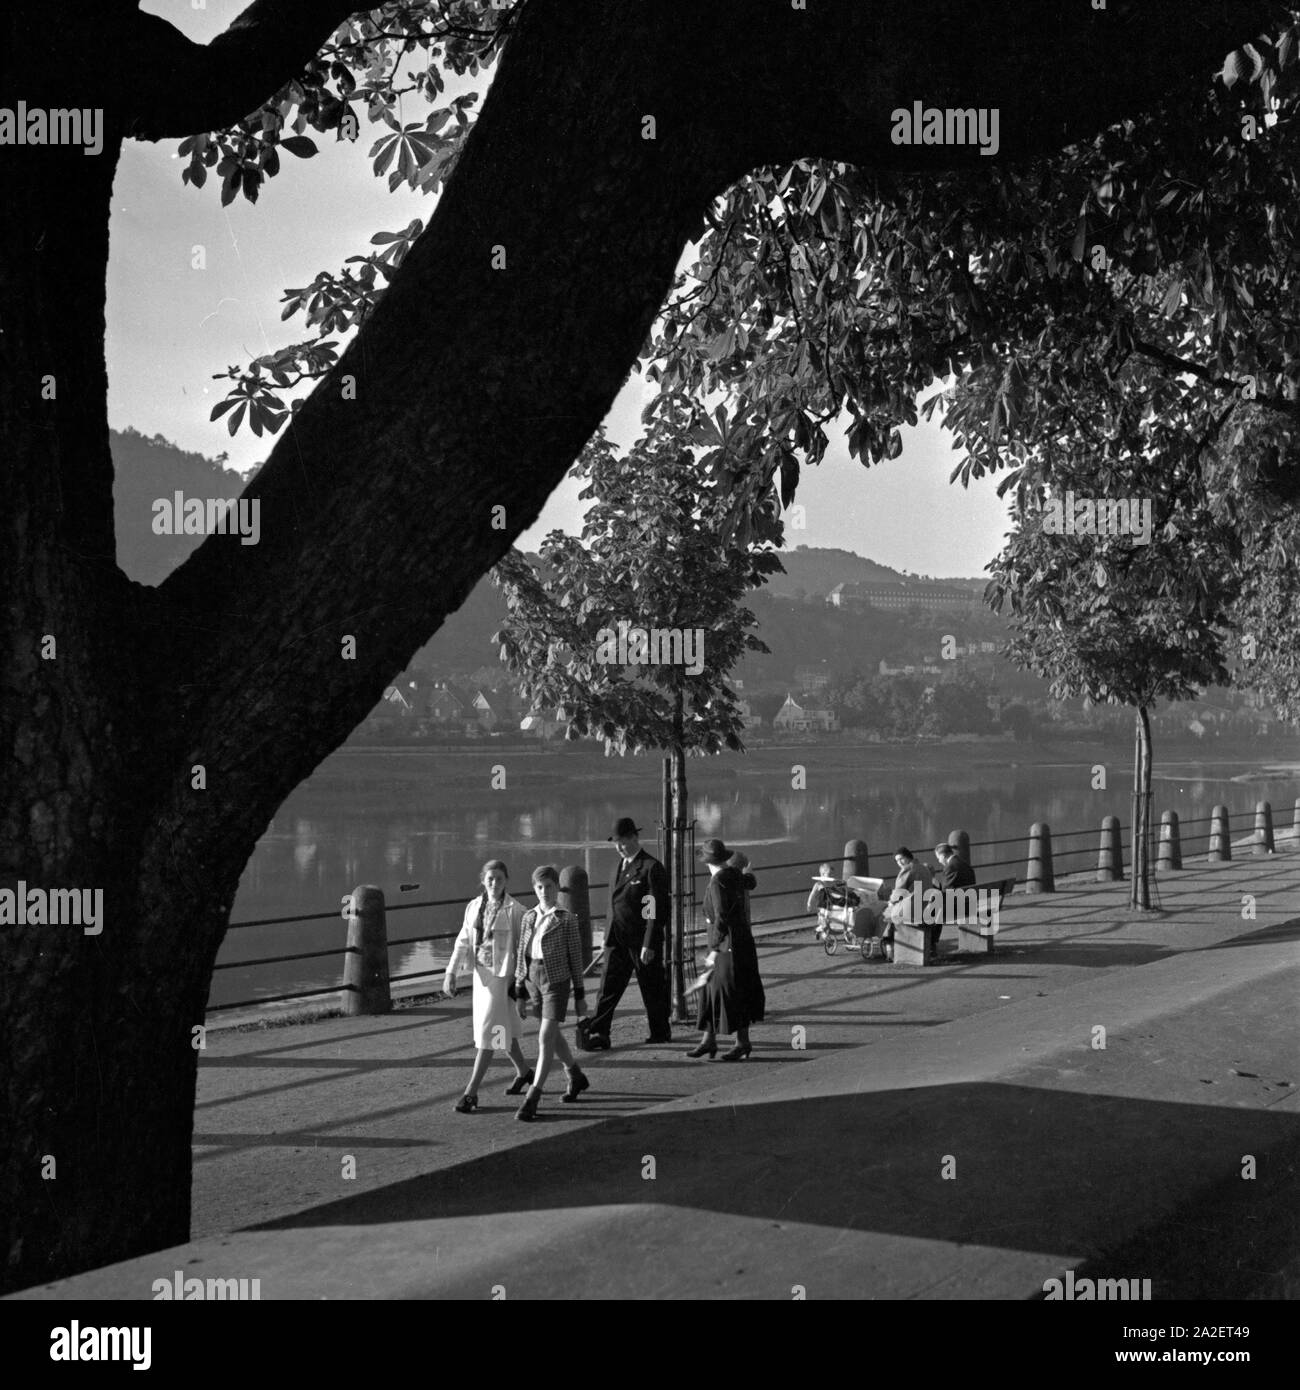 Passangen gehen am Ufer der Mosel in Trier spazieren, Deutschland 1930er Jahre. People strolling on the shre of river Moselle at Trier, Germany 1930s. Stock Photo